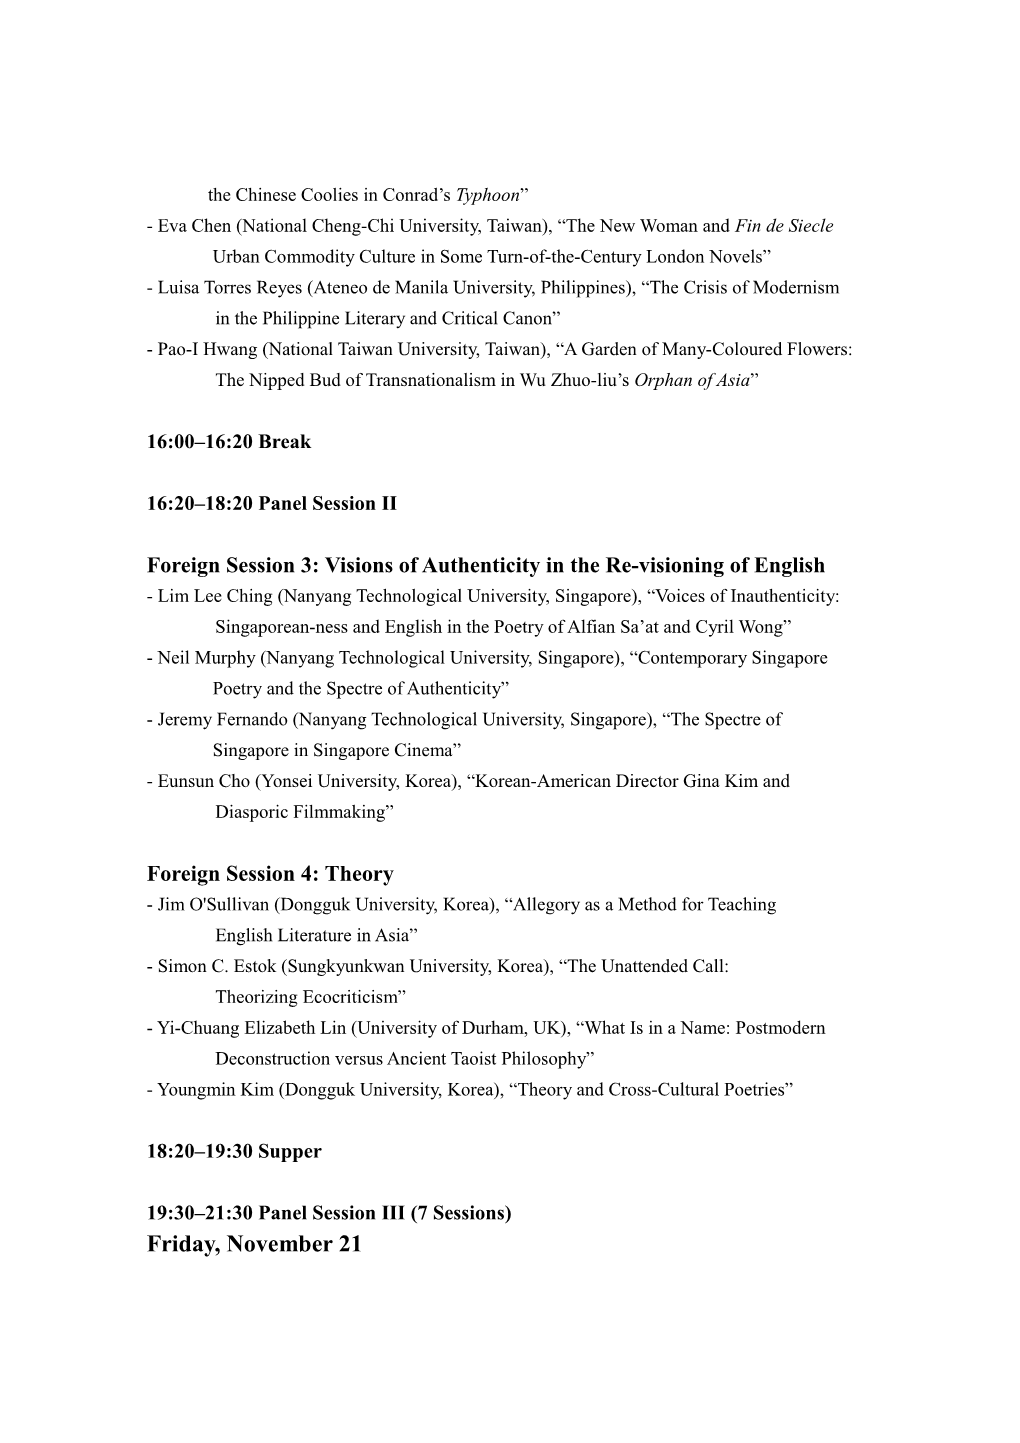 2008 ELLAK International Conference Program (Tentative)